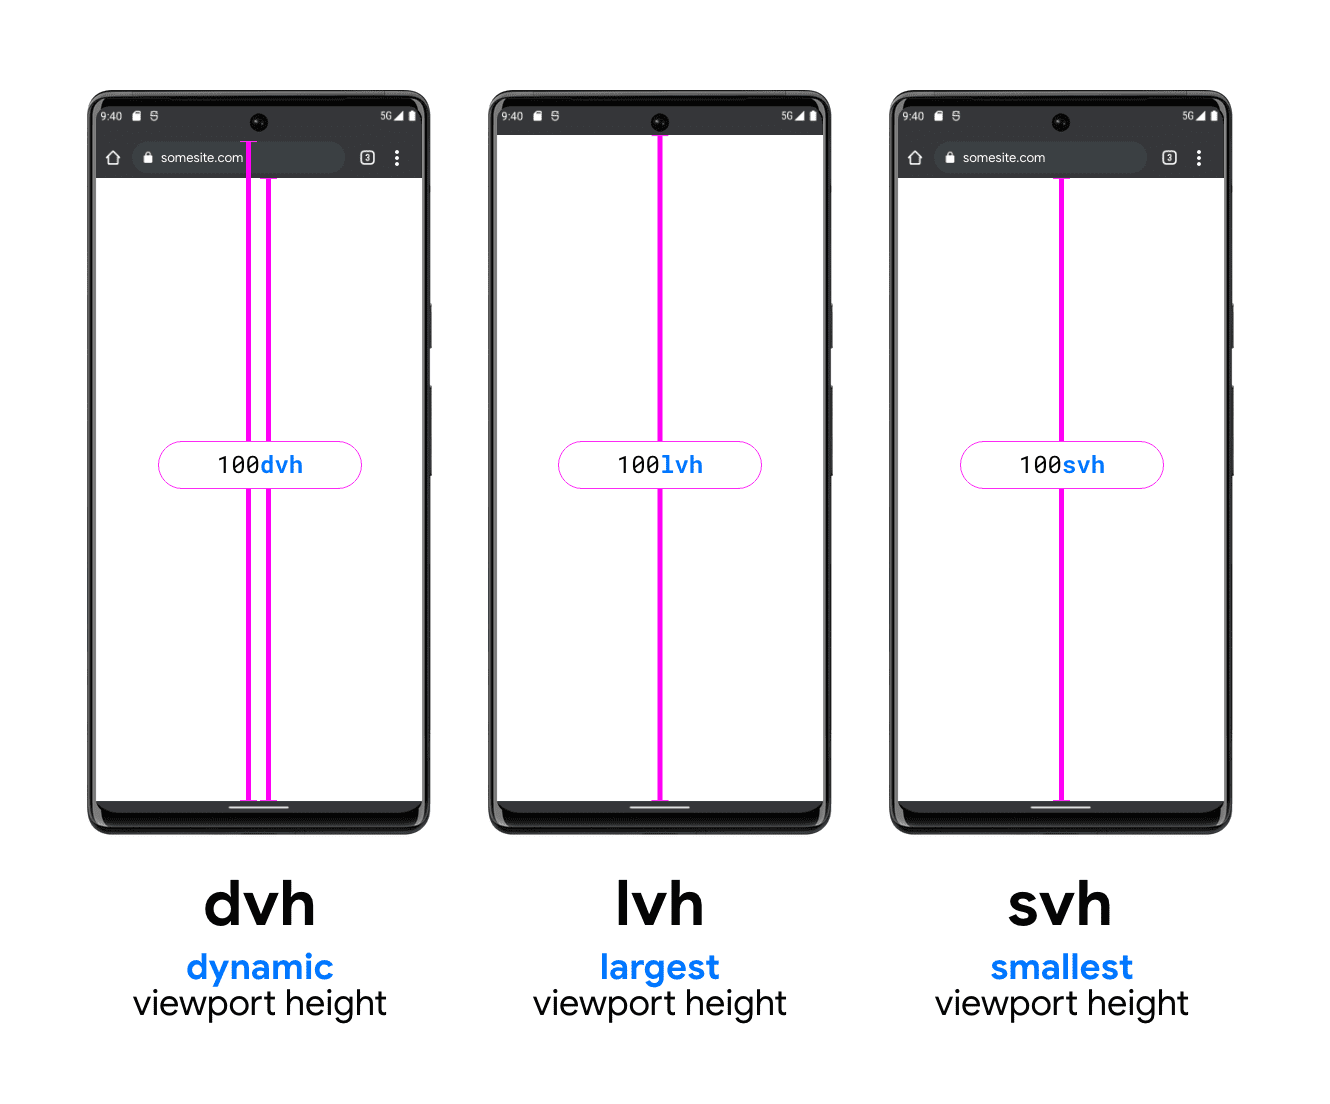 DVH, LVH, SVH를 보여주는 휴대전화 3대의 그래픽 DVH 예시 휴대전화에는 두 개의 세로선이 있습니다. 하나는 검색창 하단과 표시 영역 하단 사이, 다른 하나는 검색창 위 (시스템 상태 표시줄 아래)에서 표시 영역의 하단까지입니다. DVH가 이러한 두 길이 중 하나일 수 있다는 것을 보여줍니다. LVH는 기기 상태 표시줄 하단과 휴대전화 표시 영역의 버튼 사이에 한 줄이 가운데에 표시됩니다. 마지막은 브라우저 검색창 하단에서 표시 영역 하단까지의 선을 표시하는 SVH 단위의 예입니다.